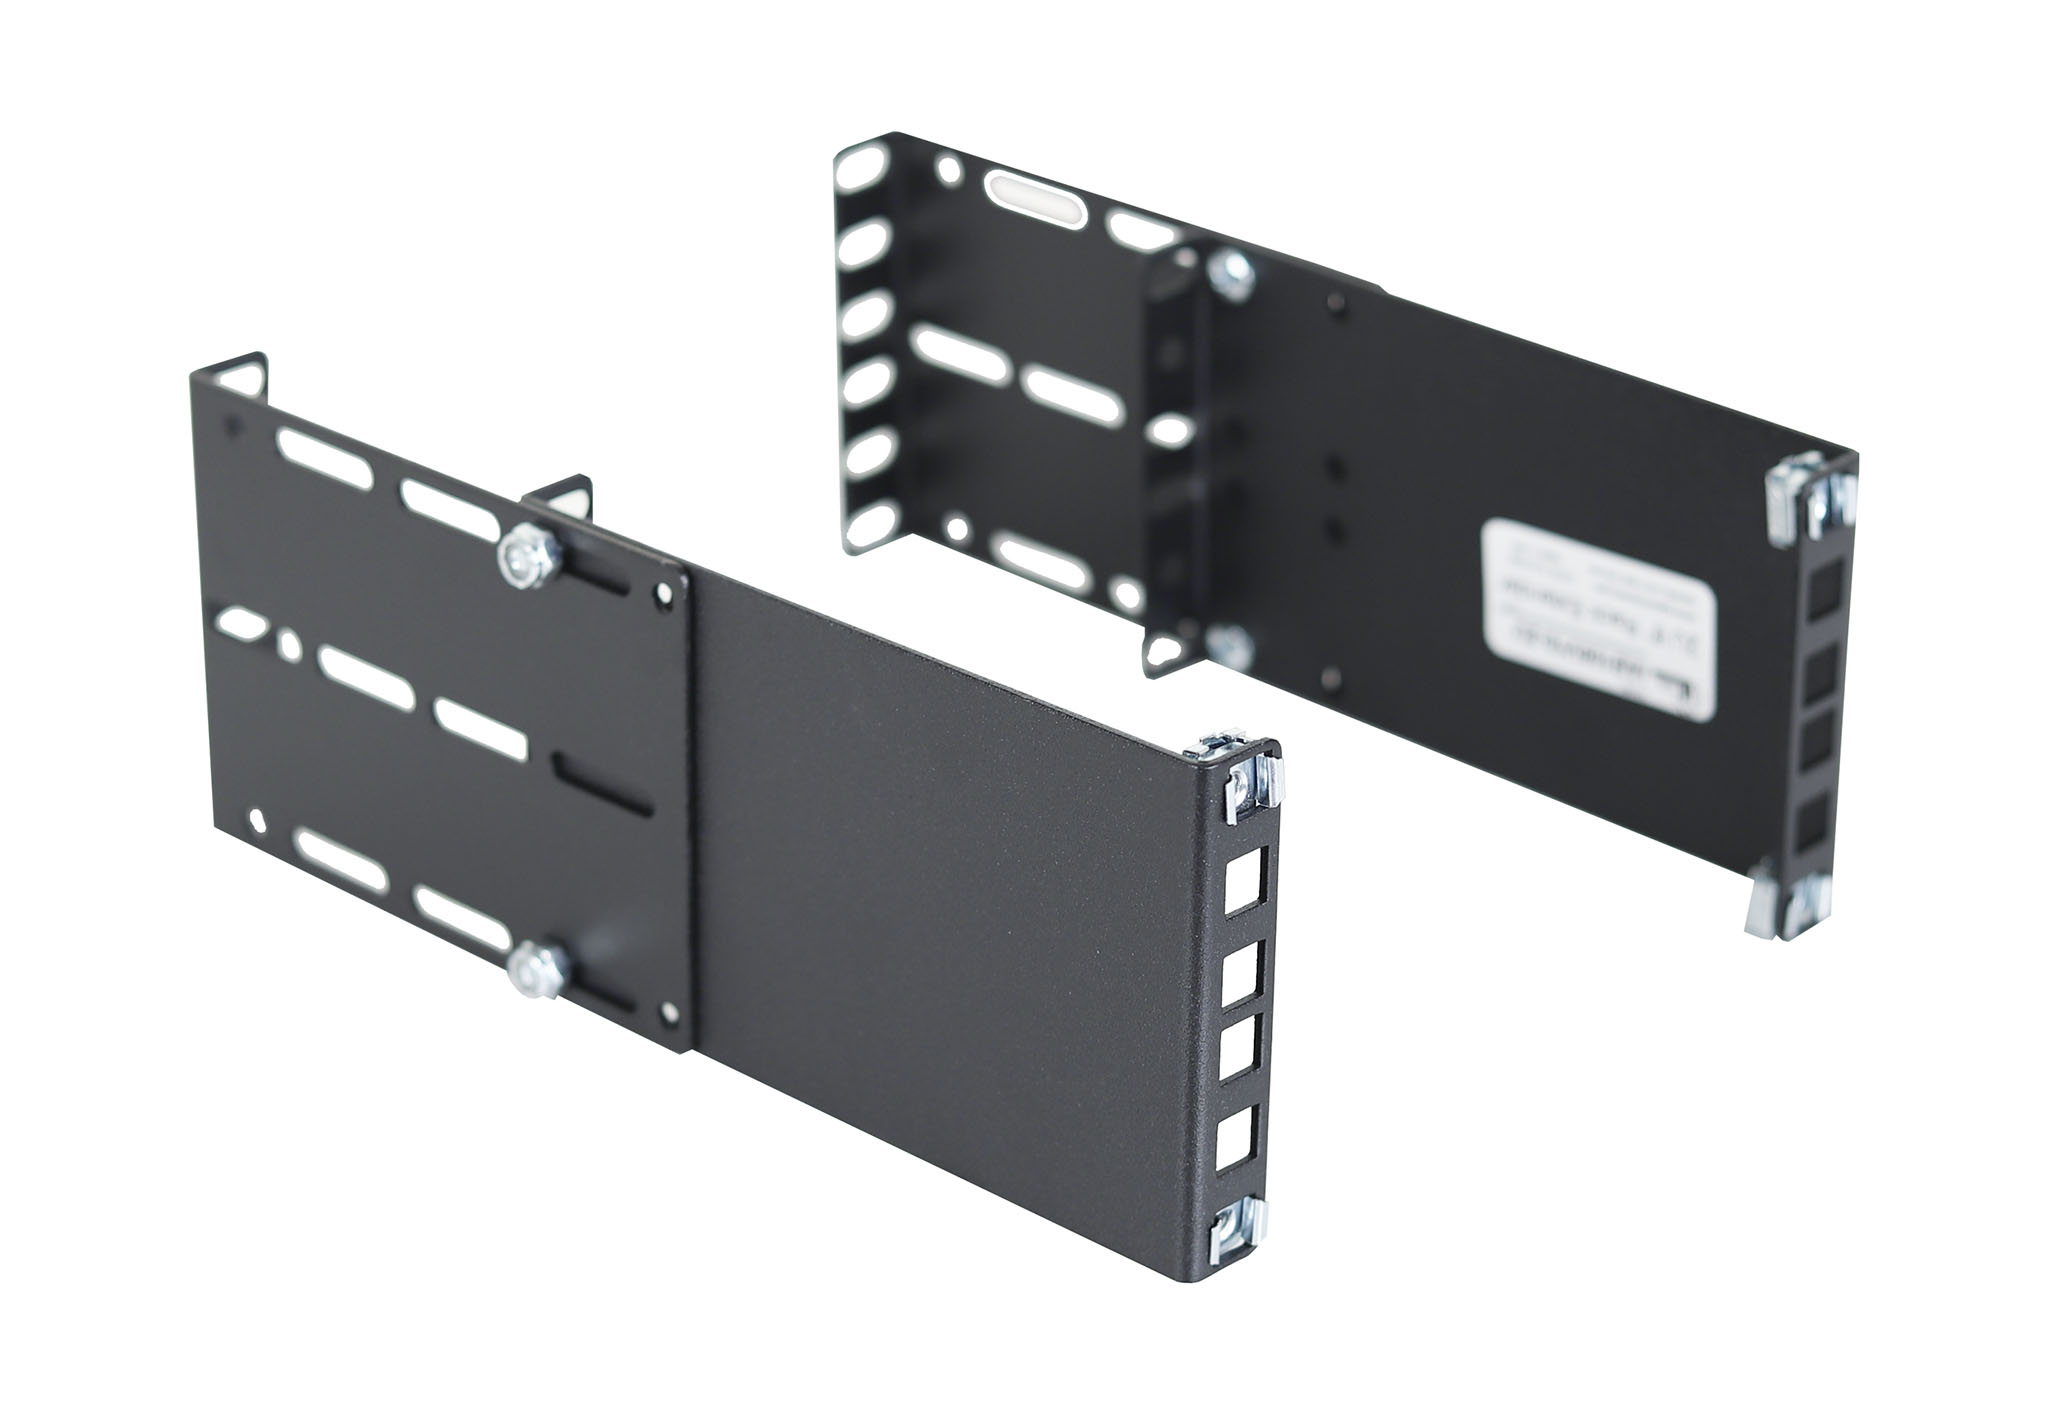 IAENCLOSURES 110V10-2U 2U 10 inch depth adjustable rack extender brackets for EIA standard 19 inch, 23 inch and 24 inch wide rack cabinet